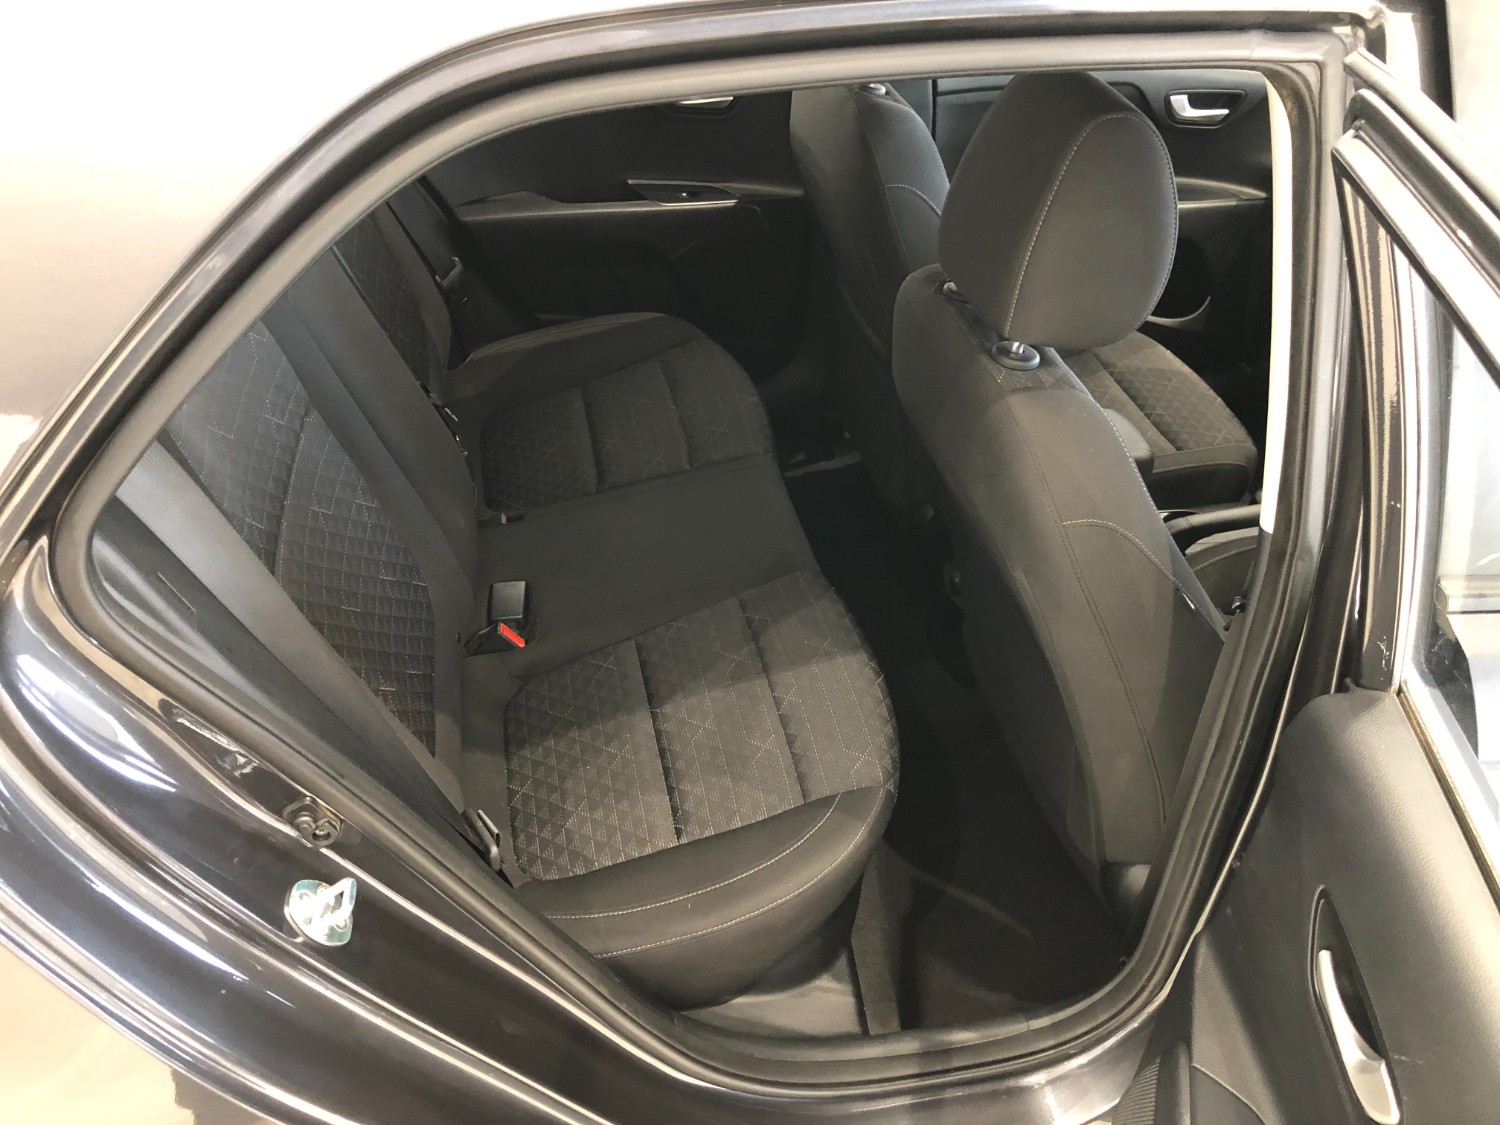 2018 Kia Rio YB S Hatchback Image 11